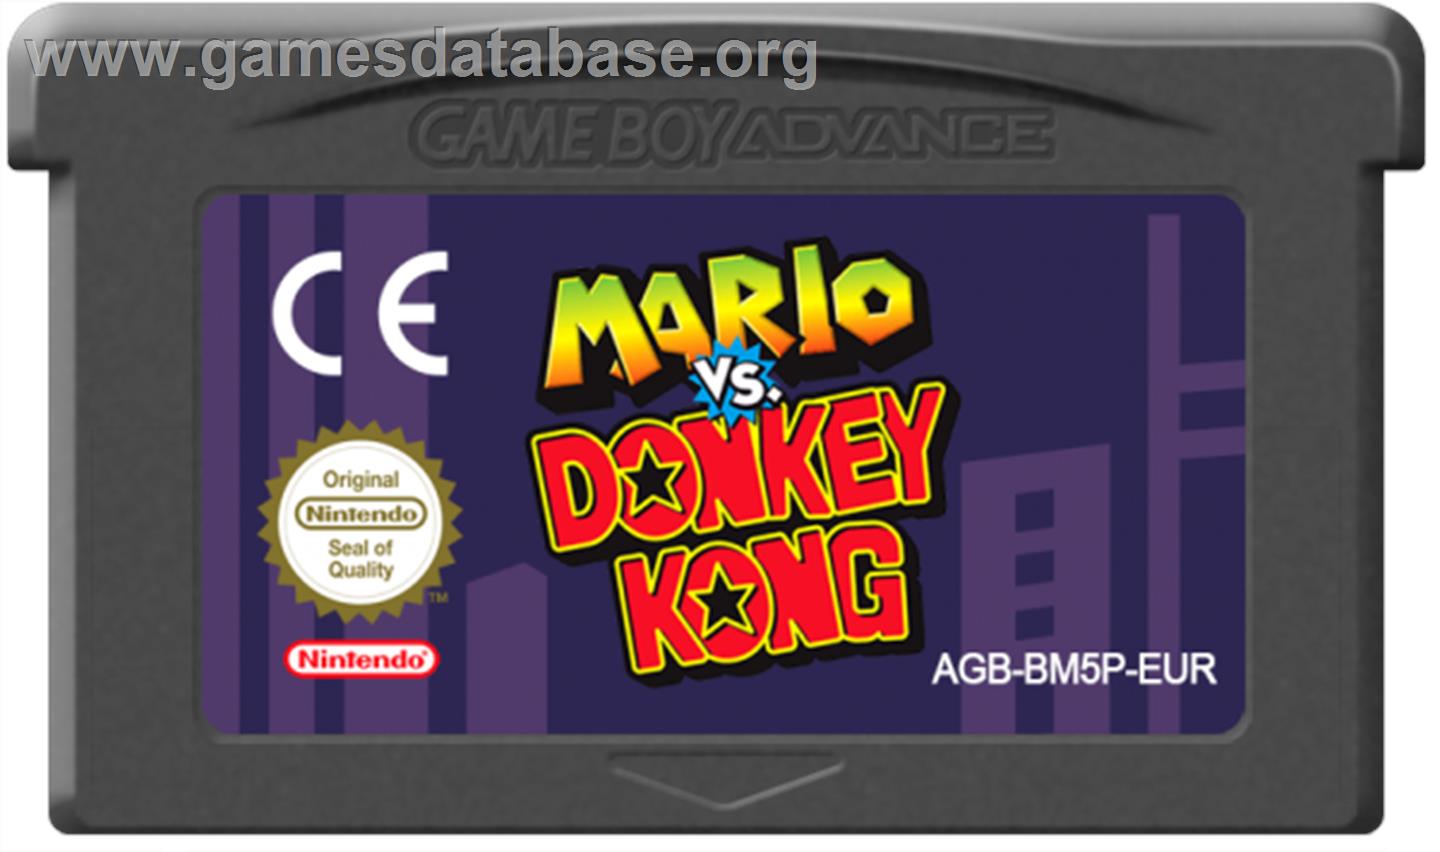 Mario vs. Donkey Kong - Nintendo Game Boy Advance - Artwork - Cartridge